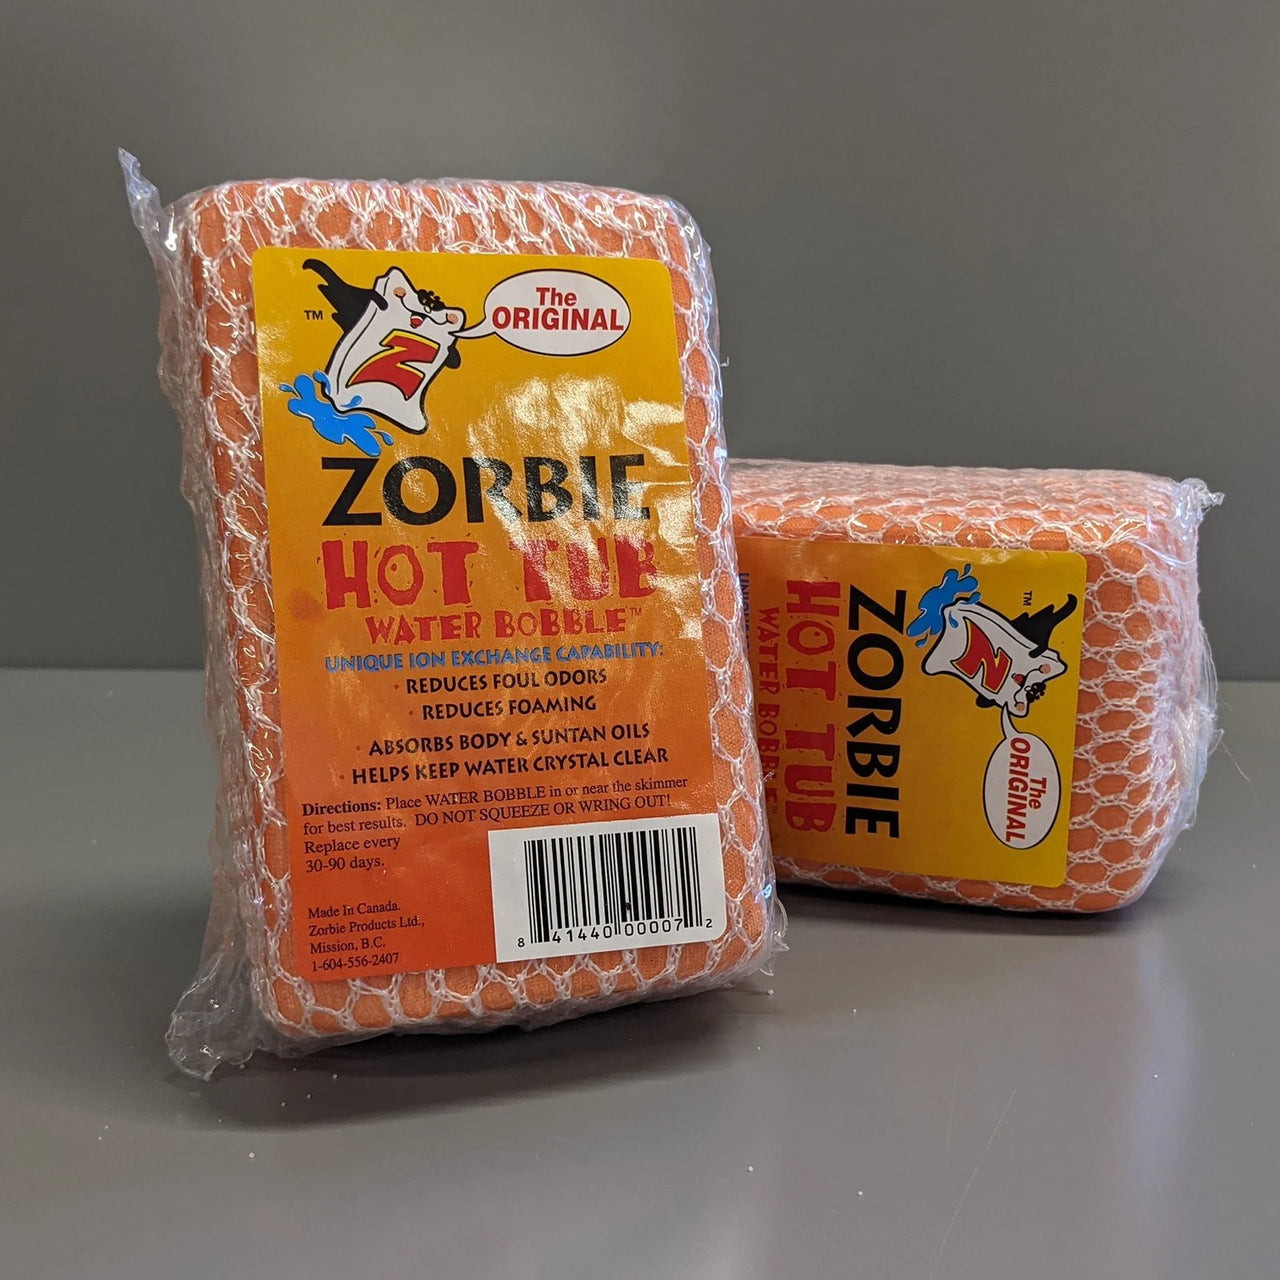 Zorbie - Hot Tub Store